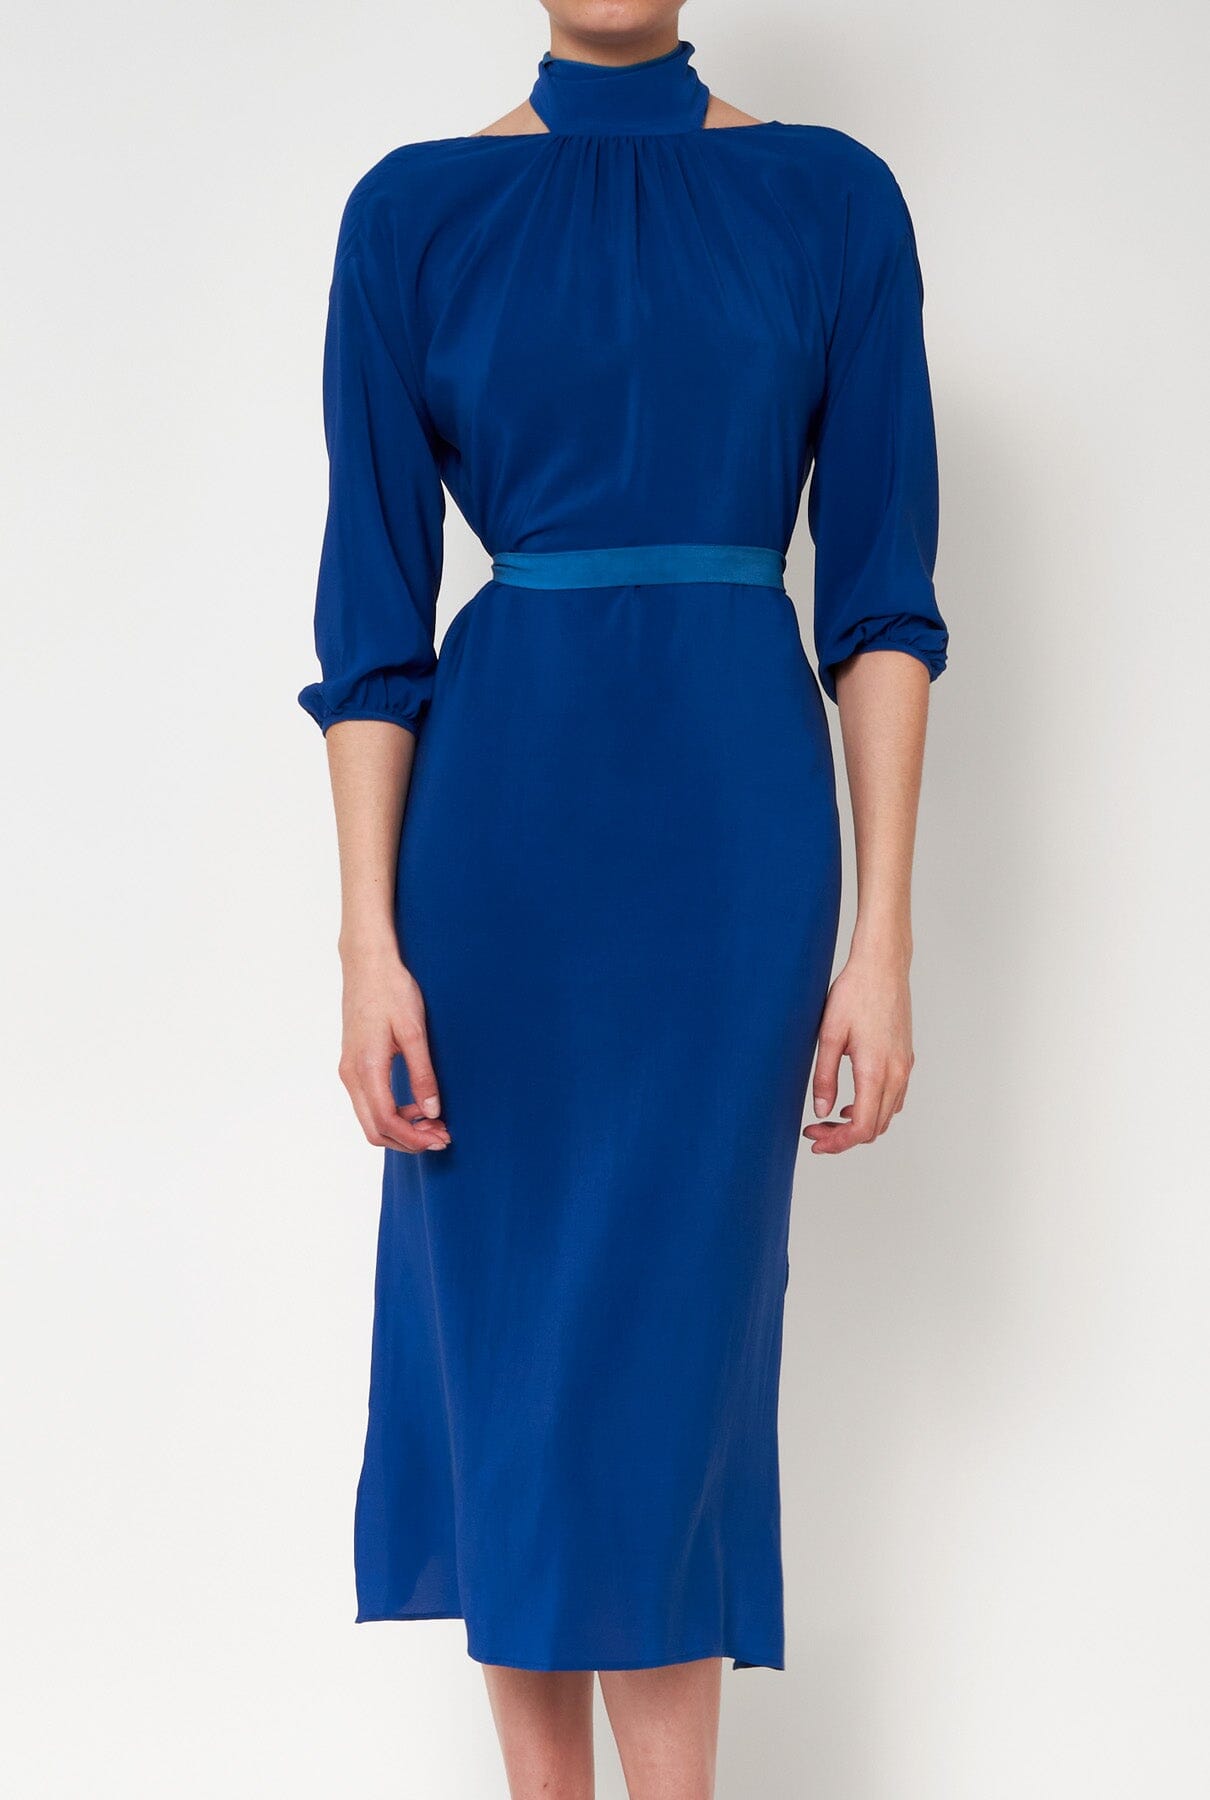 Valentina Blue Dress Natural Dye - Pre Order Dresses Atelier Aletheia 